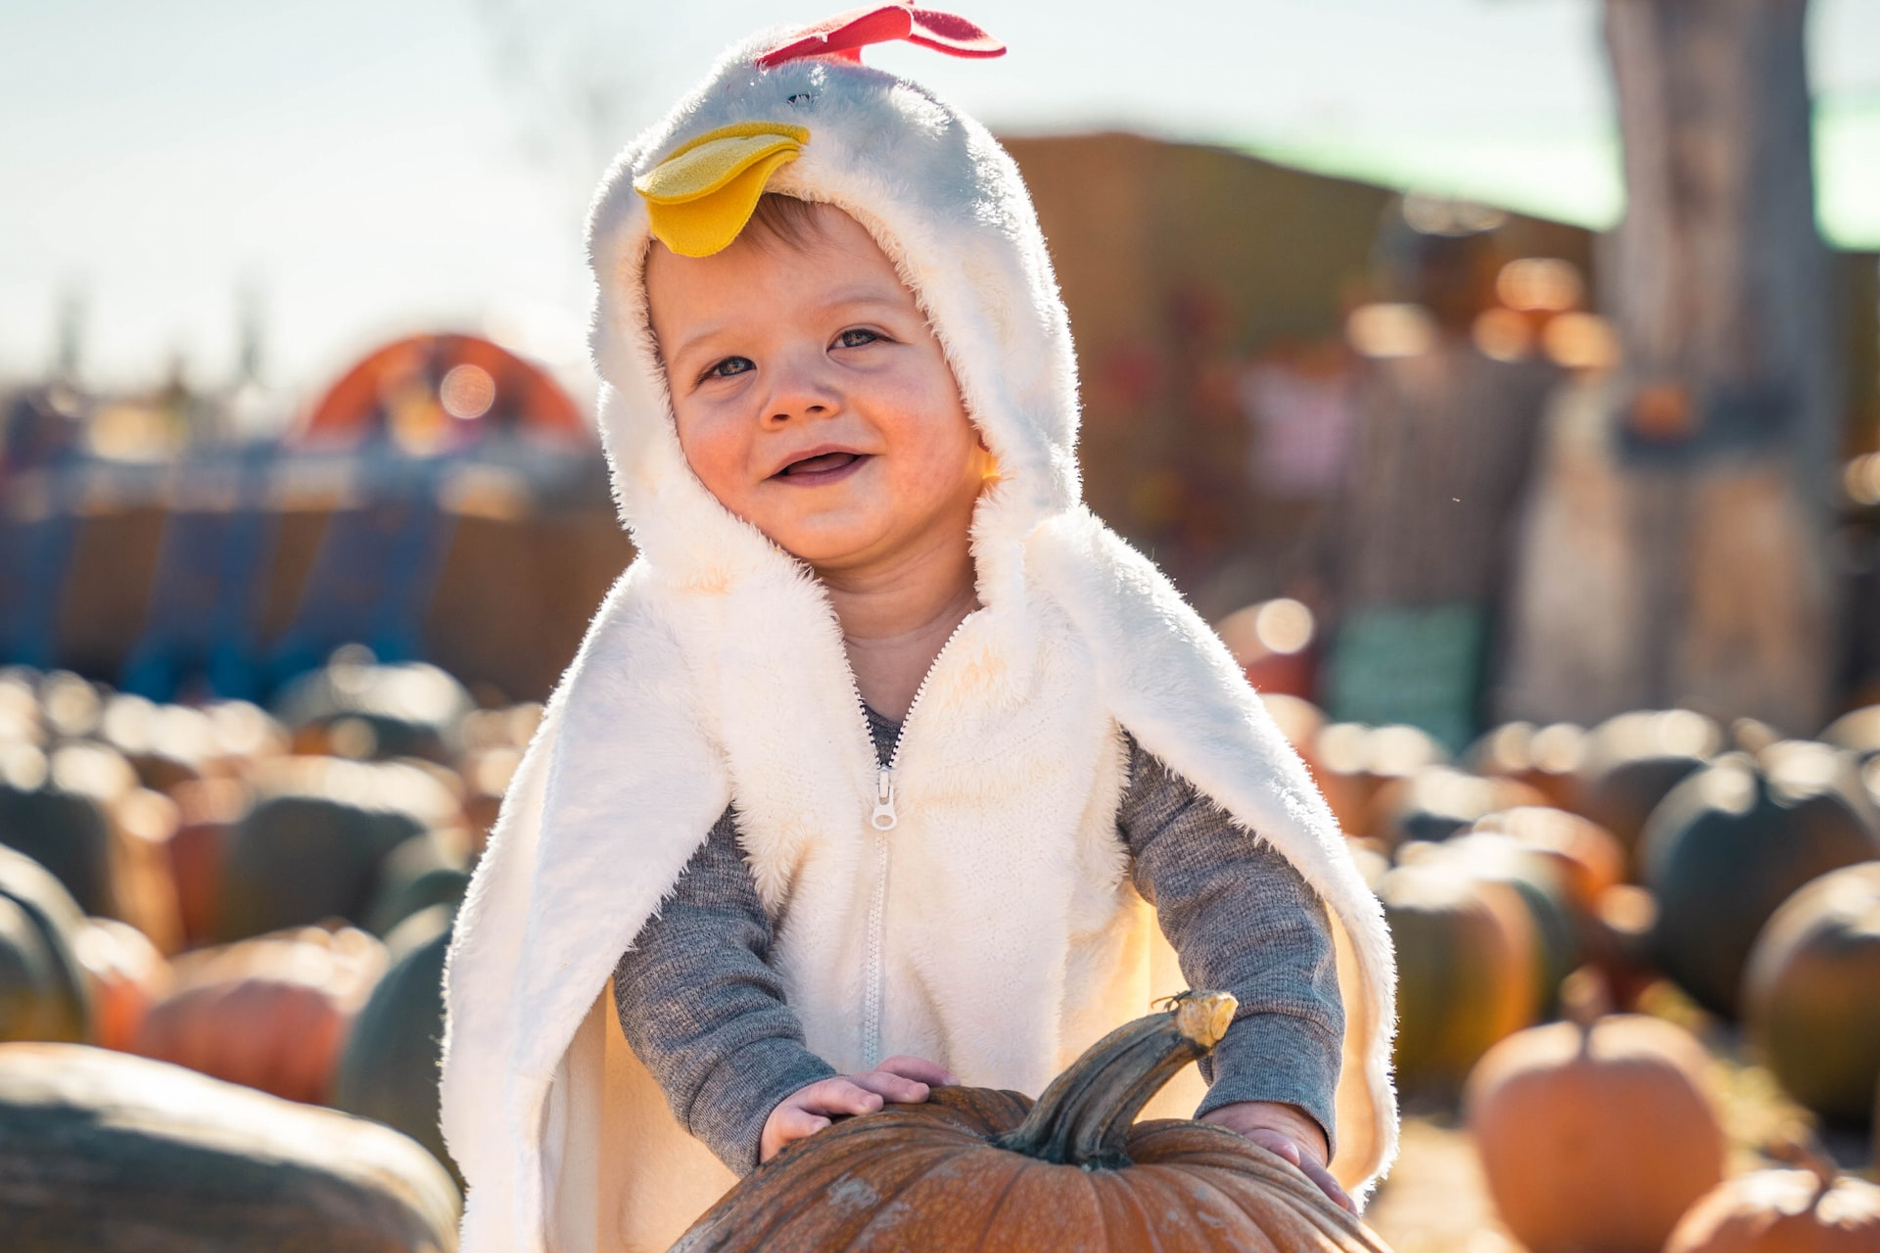 baby in chicken costume